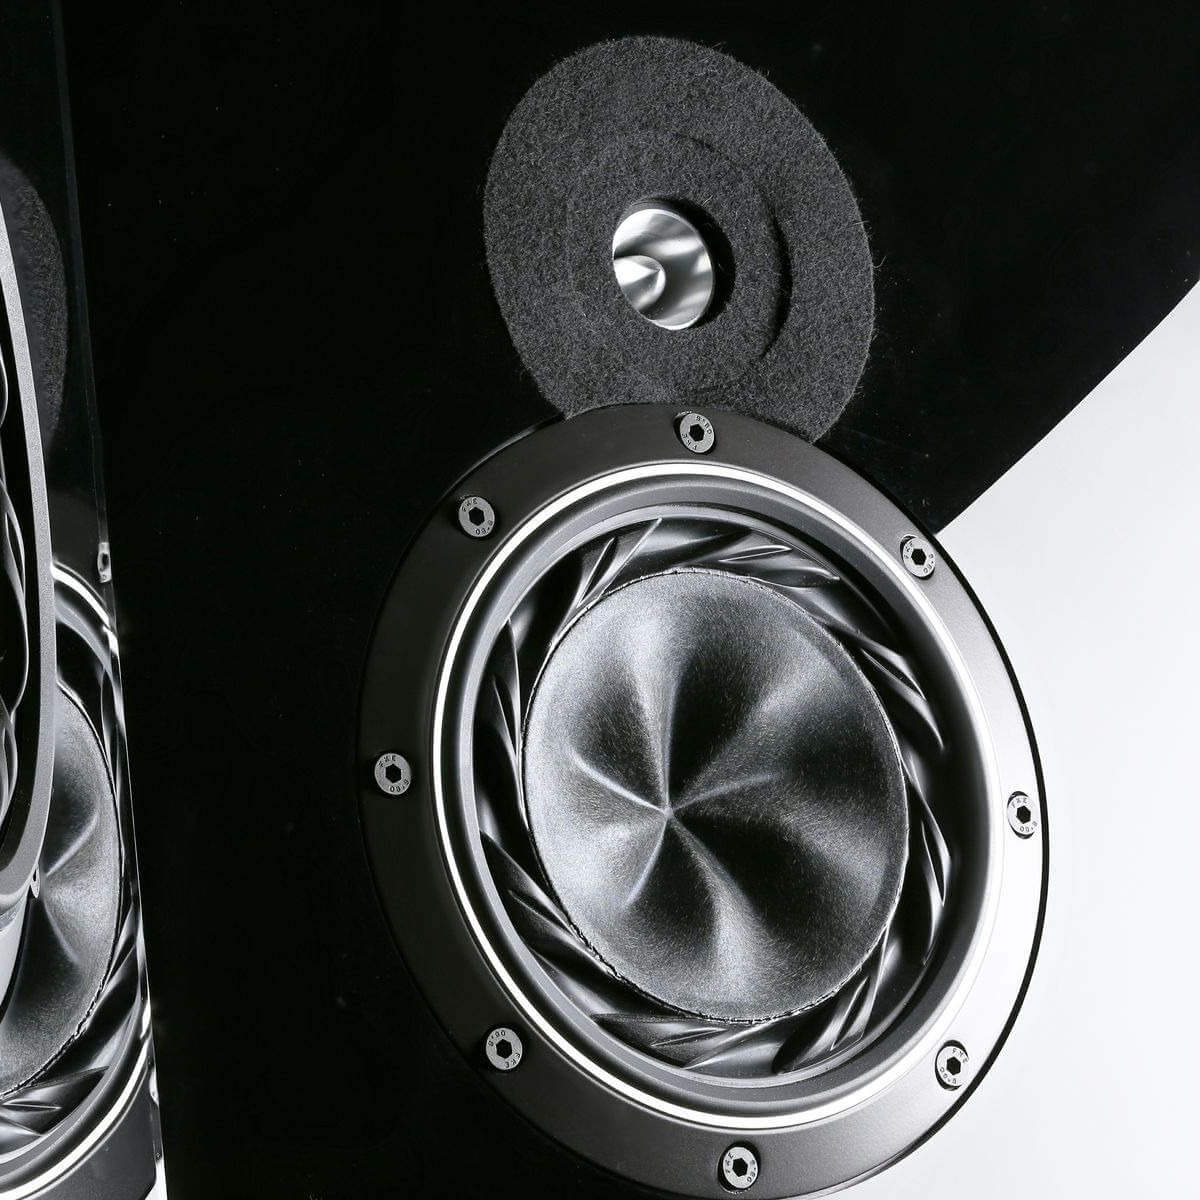 Black friday tower speakers - Speaker close-up